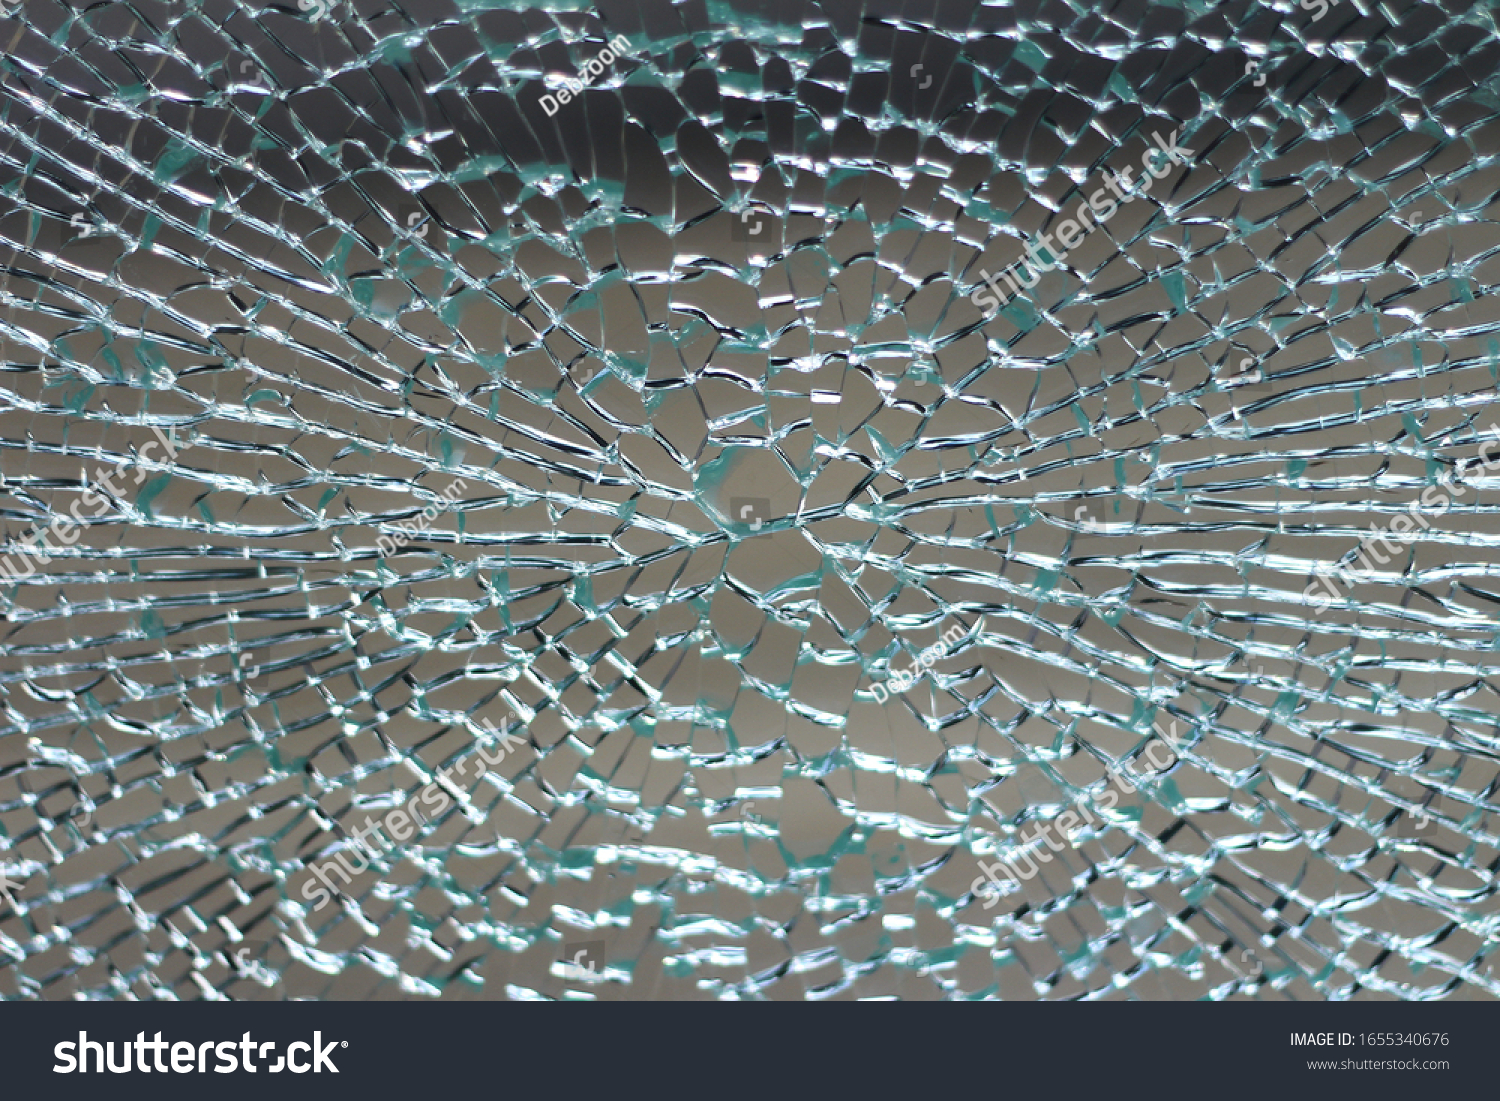 Broken glass wall outdoor background #1655340676